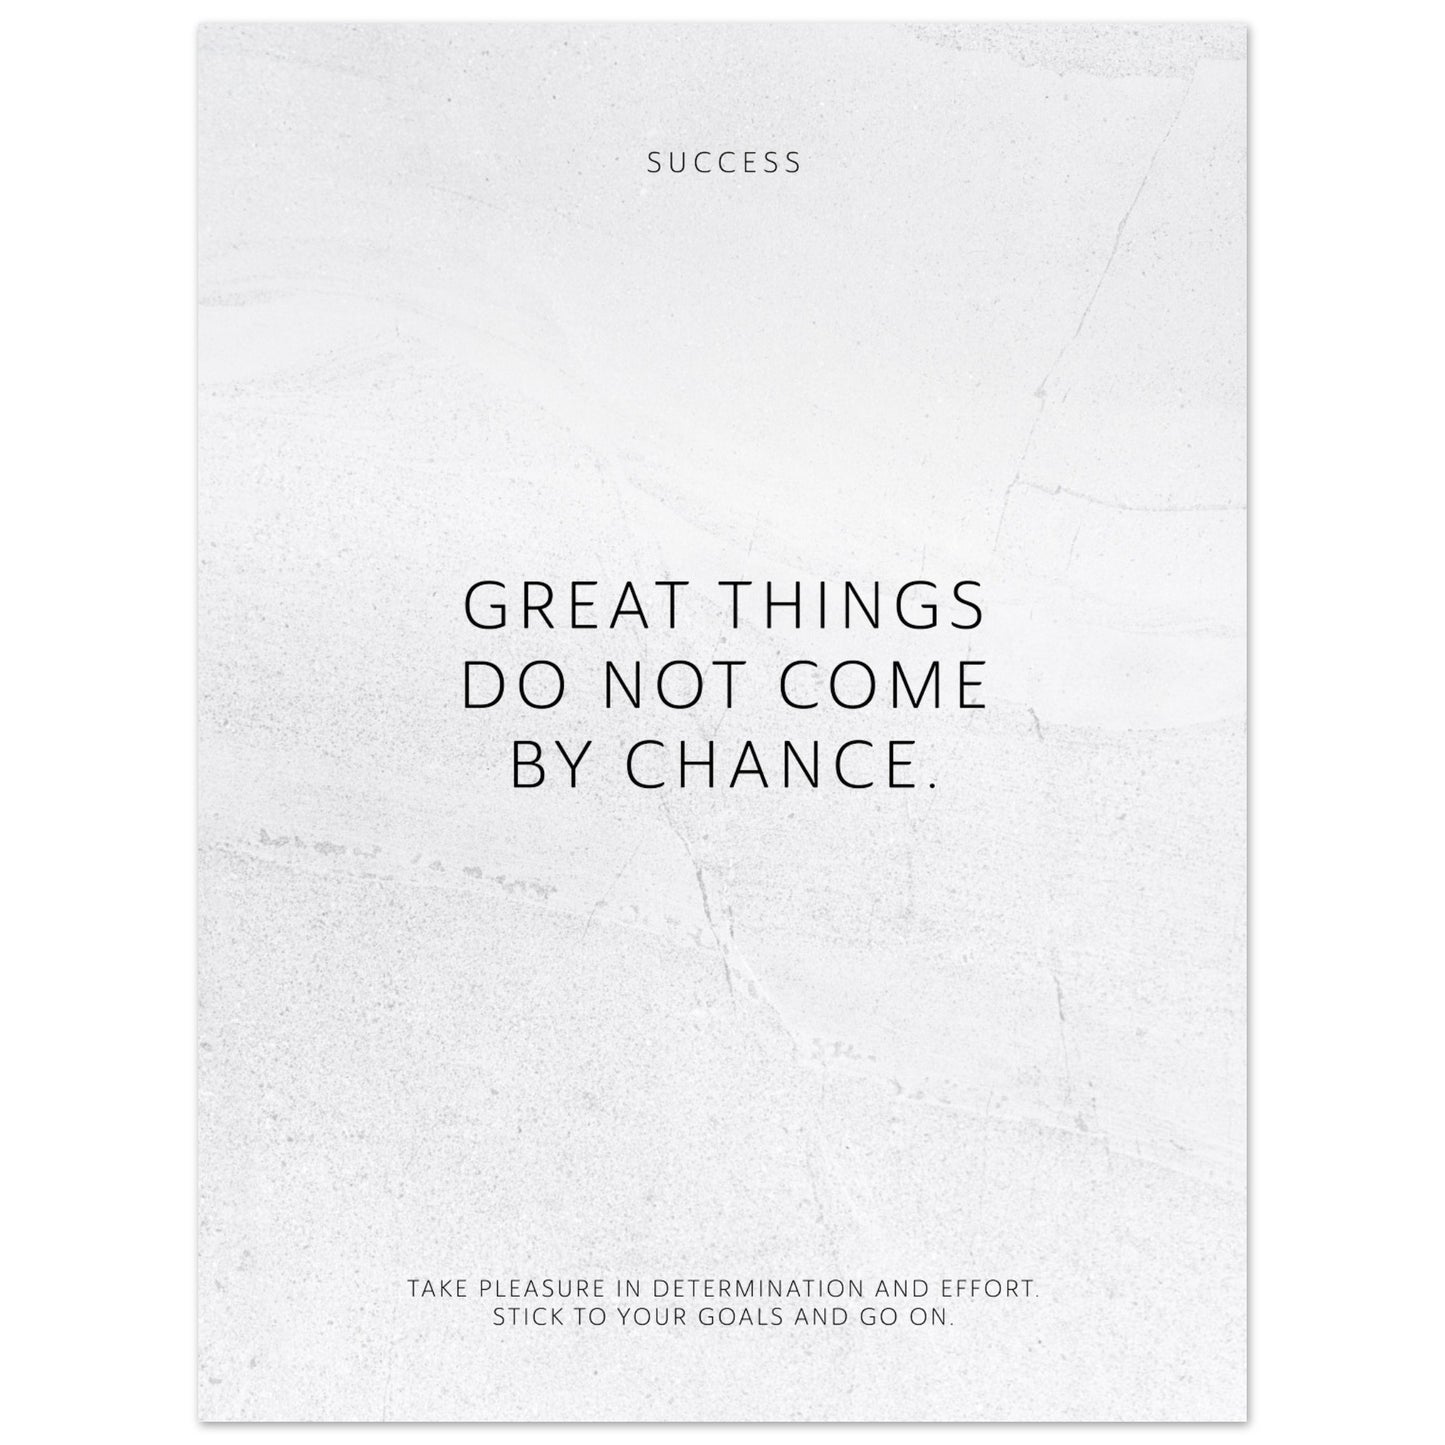 Great things do not come by chance. – Poster Seidenmatt Weiss in gewellter Steinoptik – ohne Rahmen